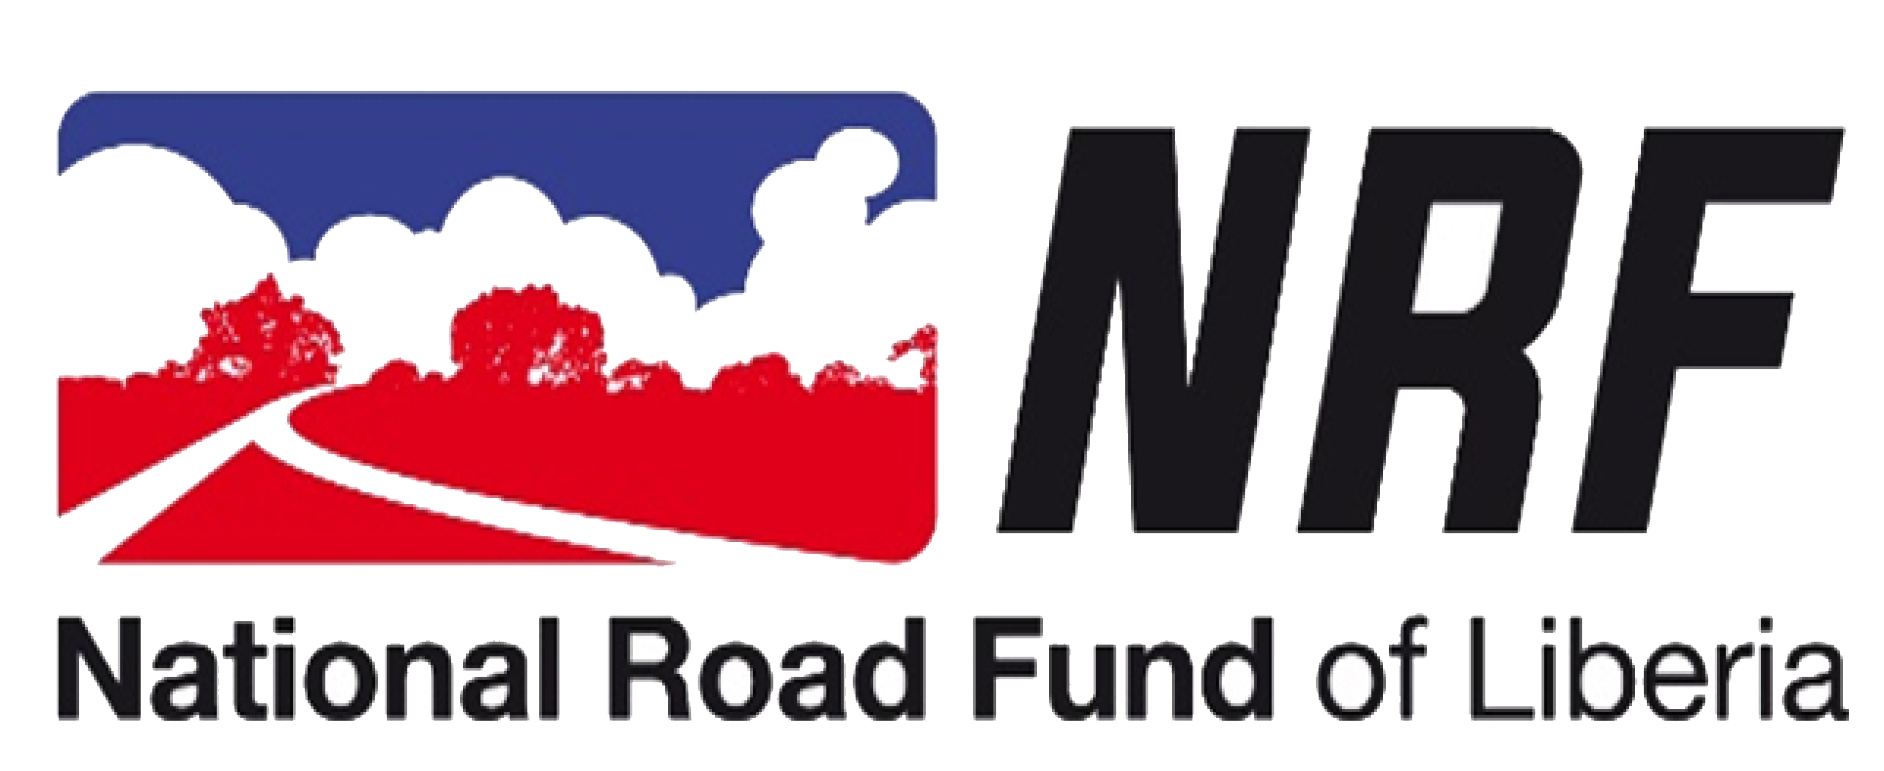 nation road fund logo